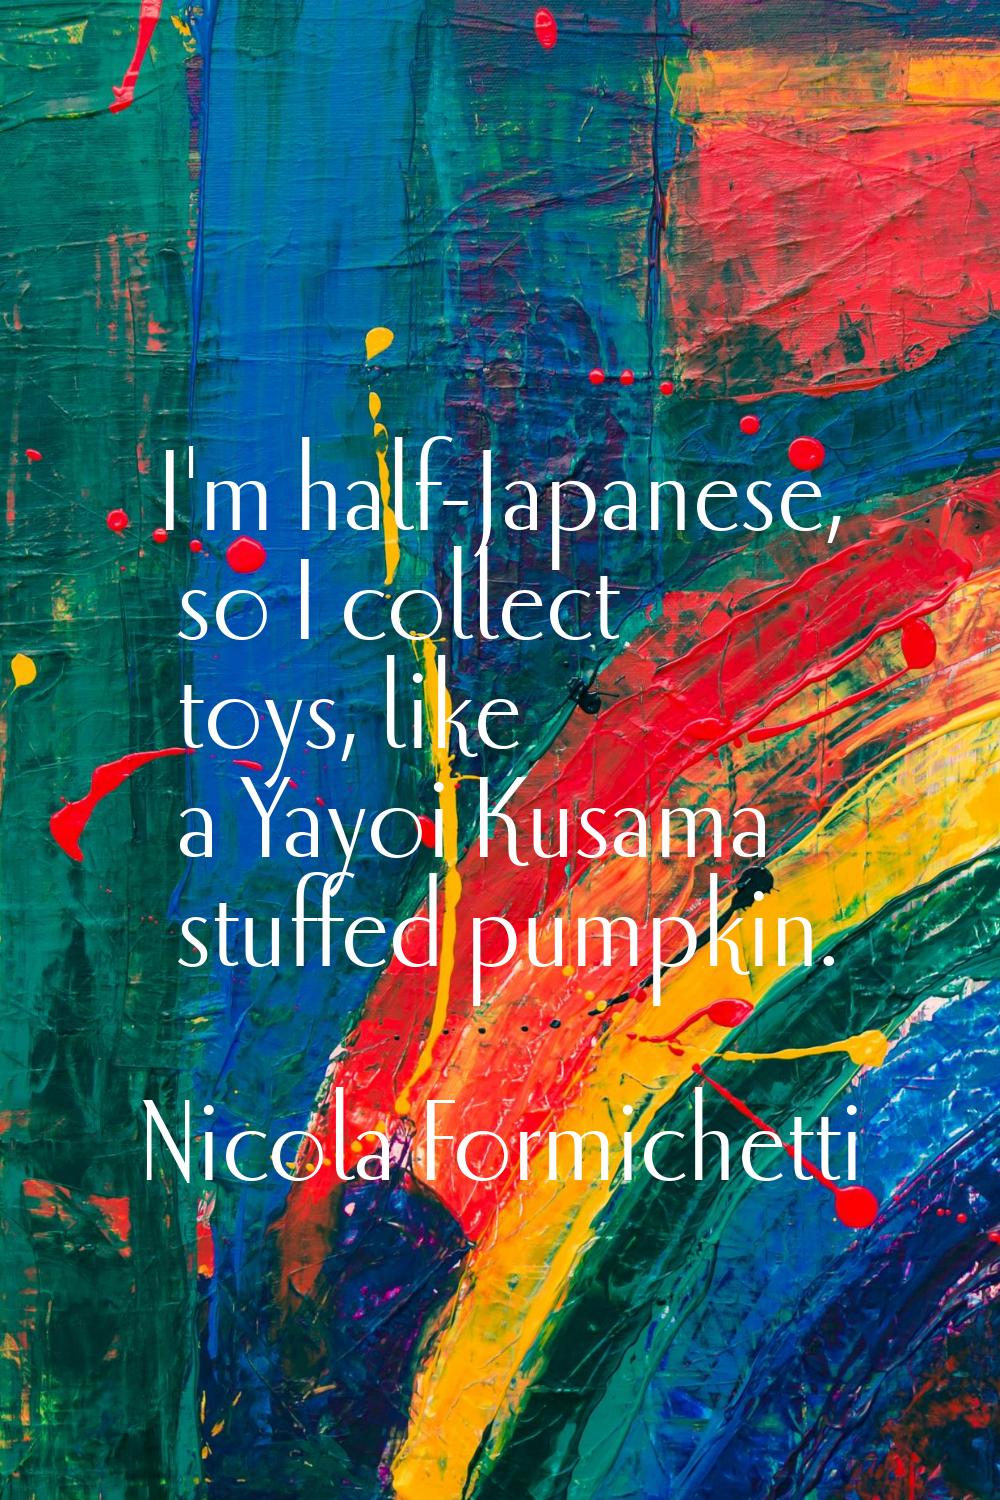 I'm half-Japanese, so I collect toys, like a Yayoi Kusama stuffed pumpkin.